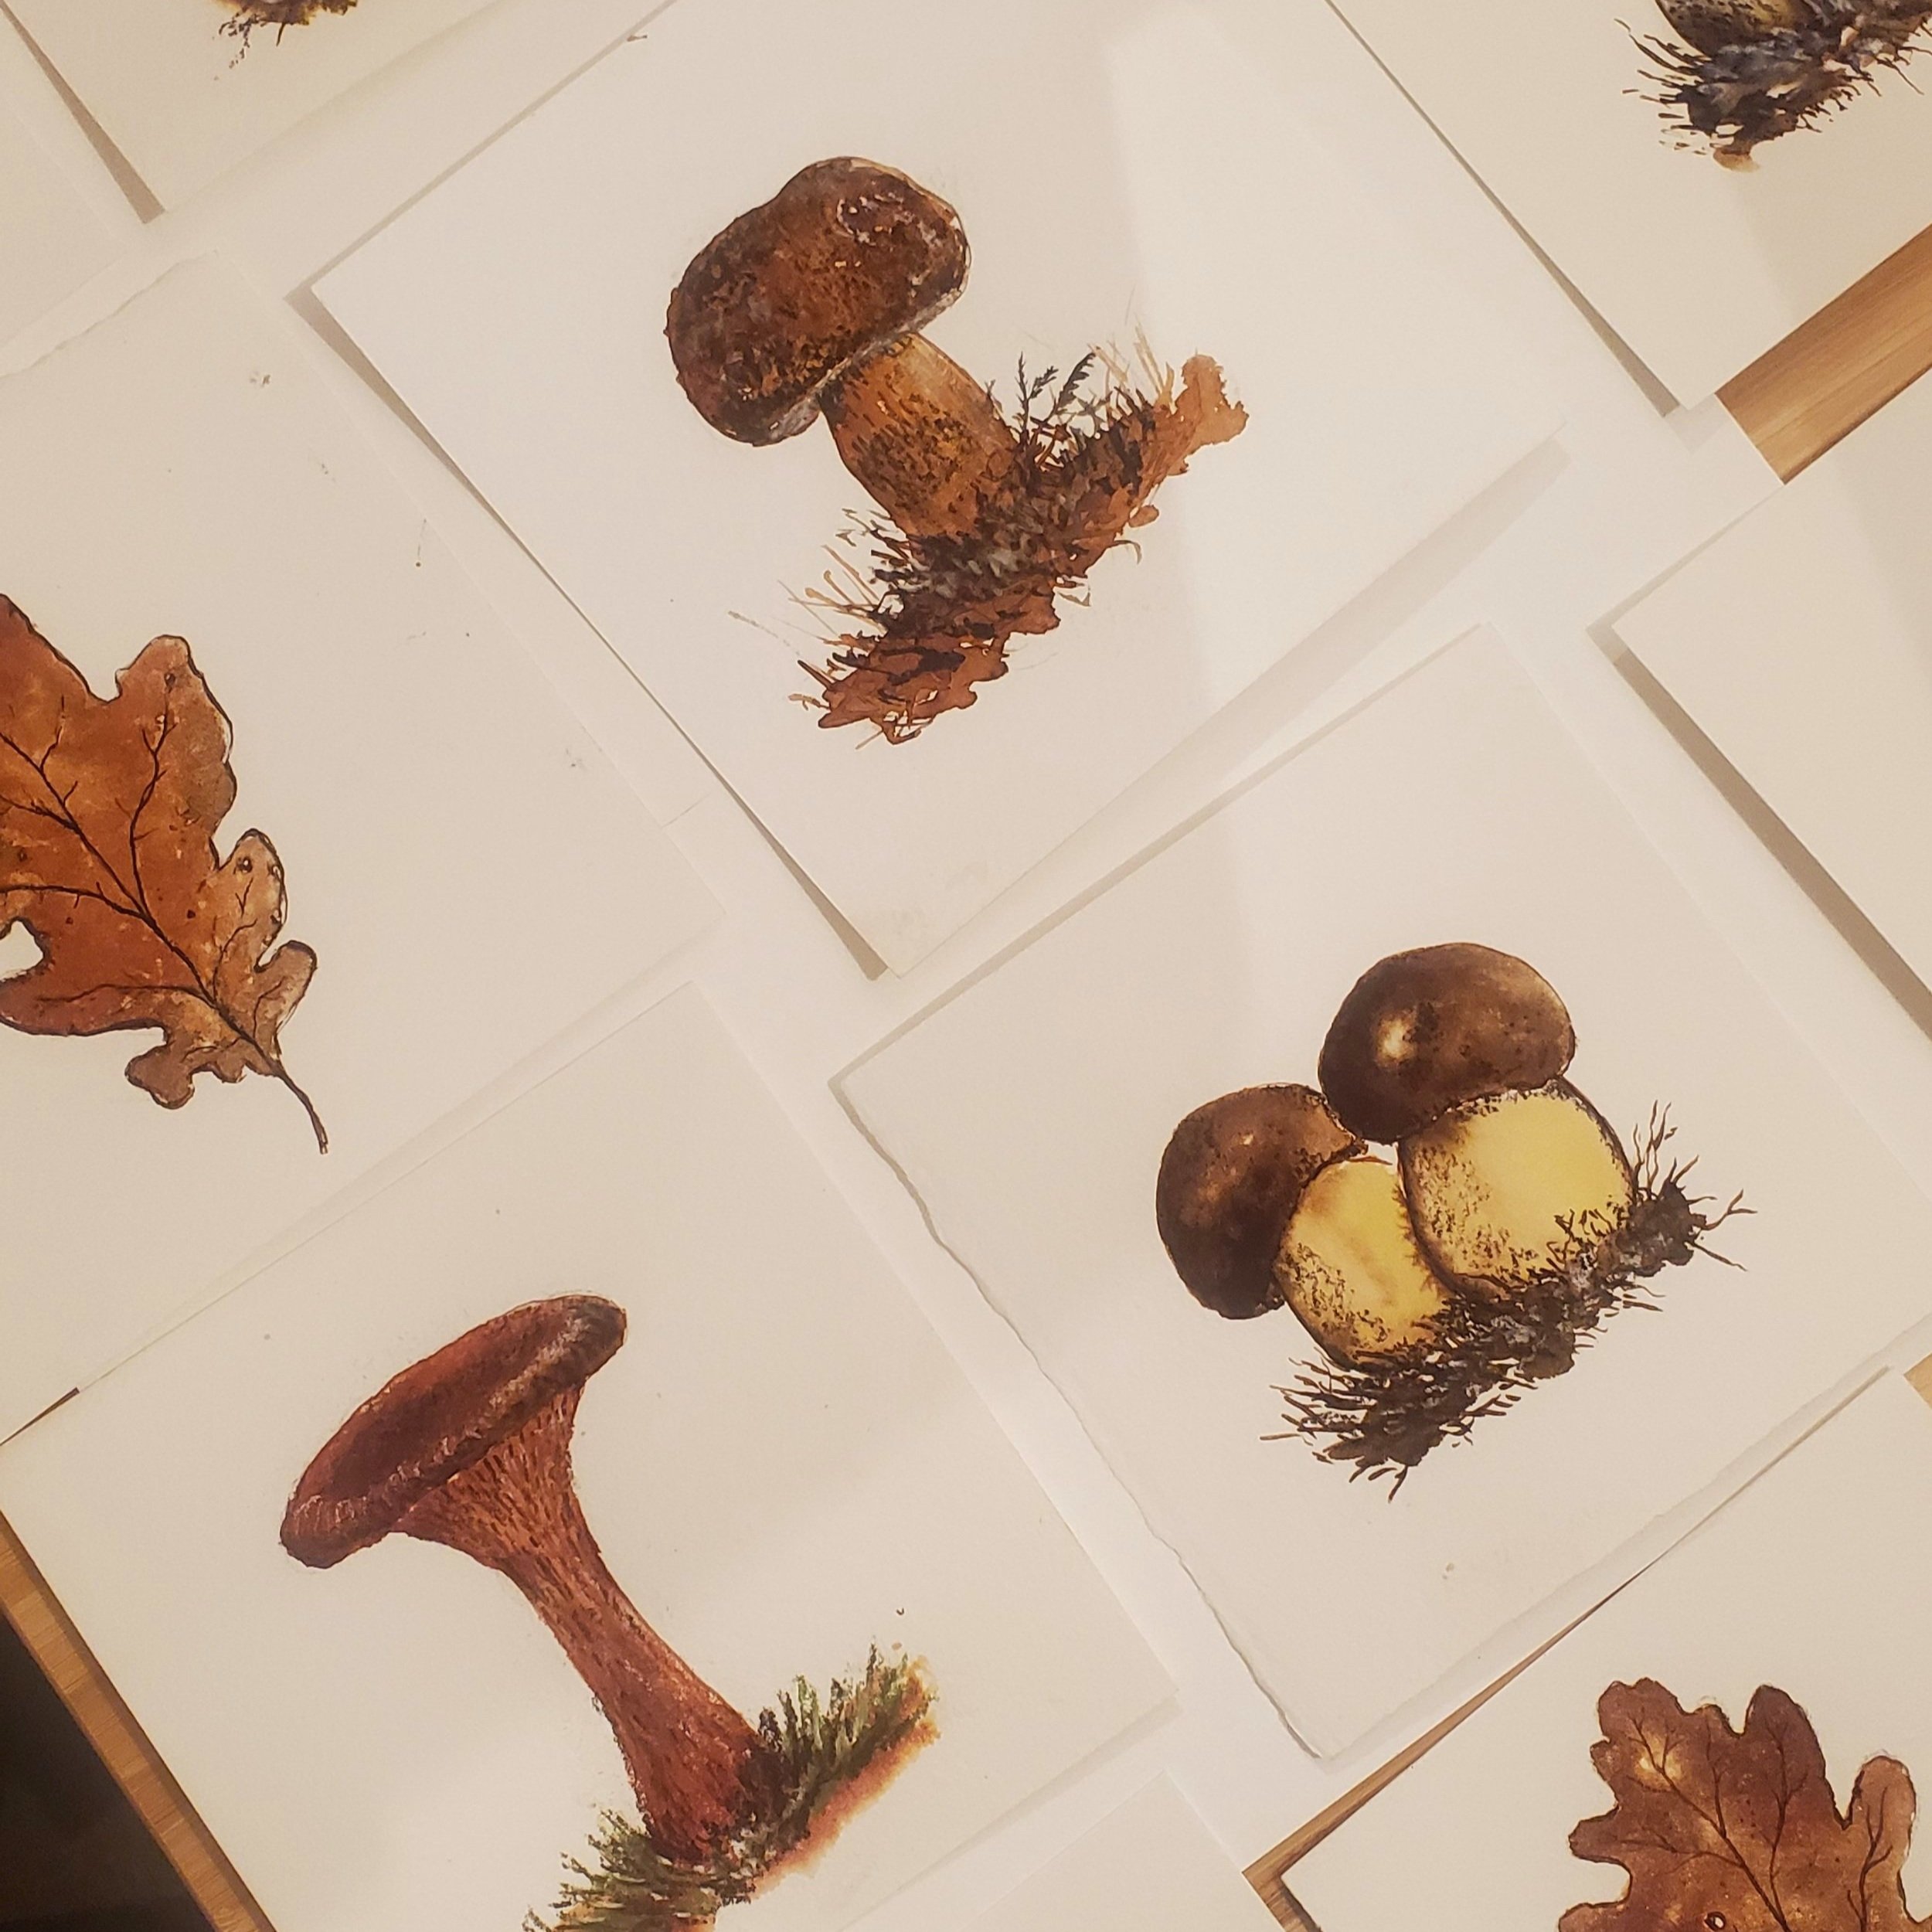 Fall in love with Fungi